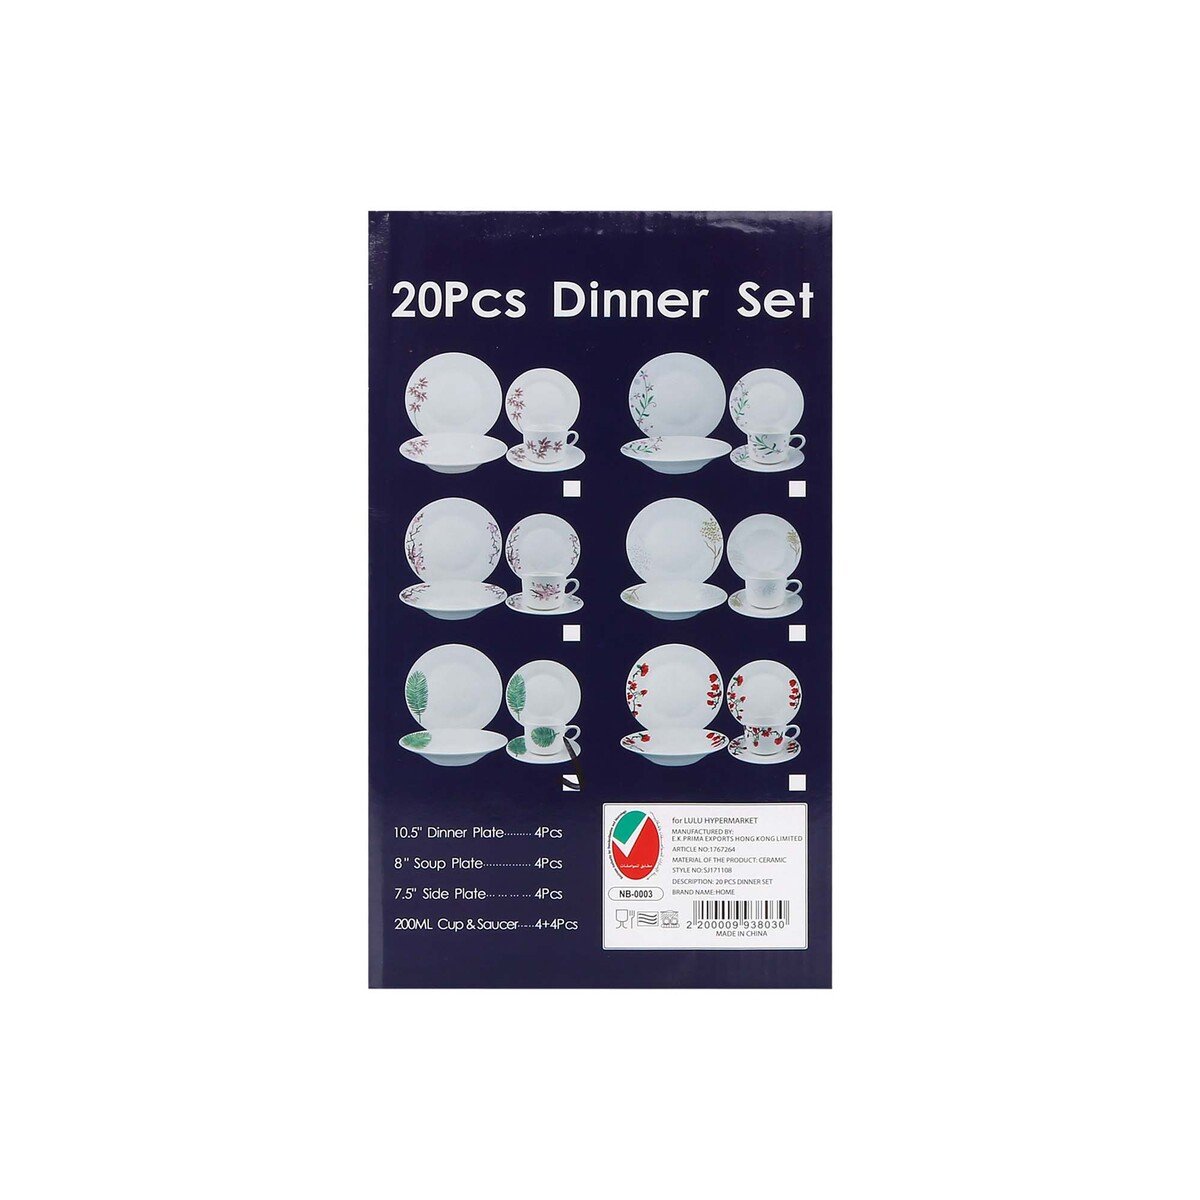 Home Ceramic Dinner Set 20pcs SJ1711 Assorted Colors / Designs